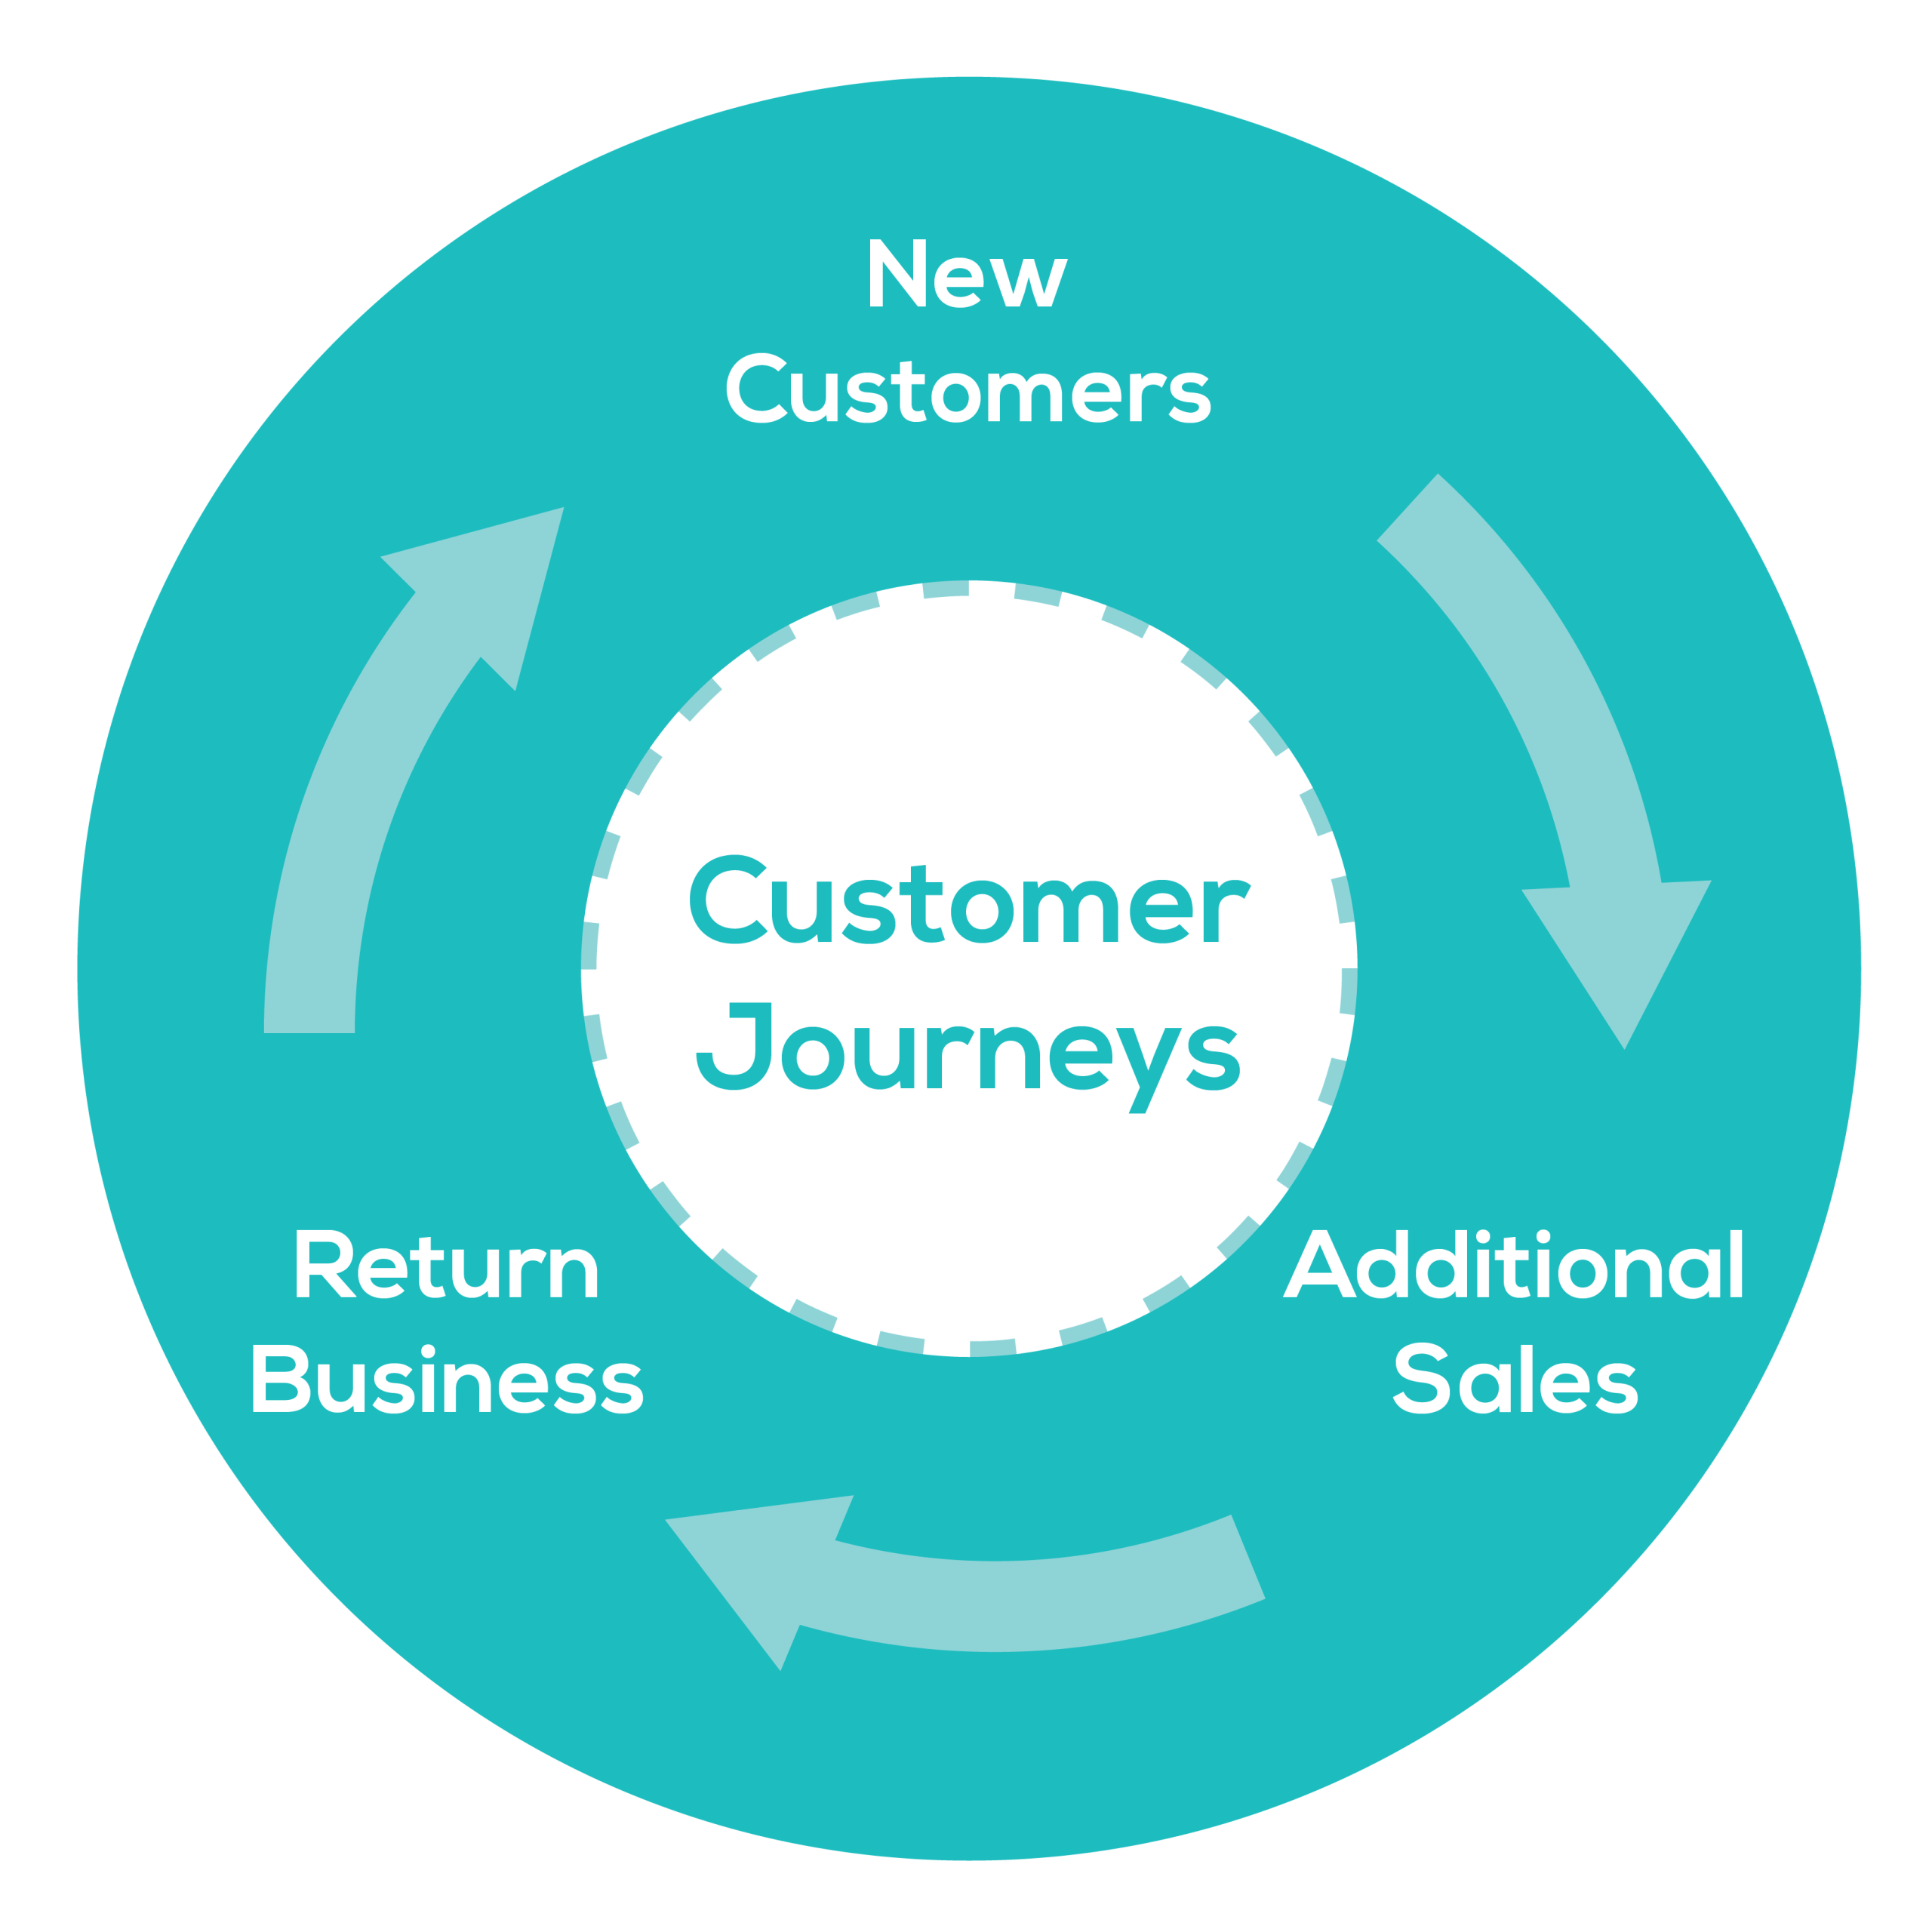 Customer journeys help increase revenue